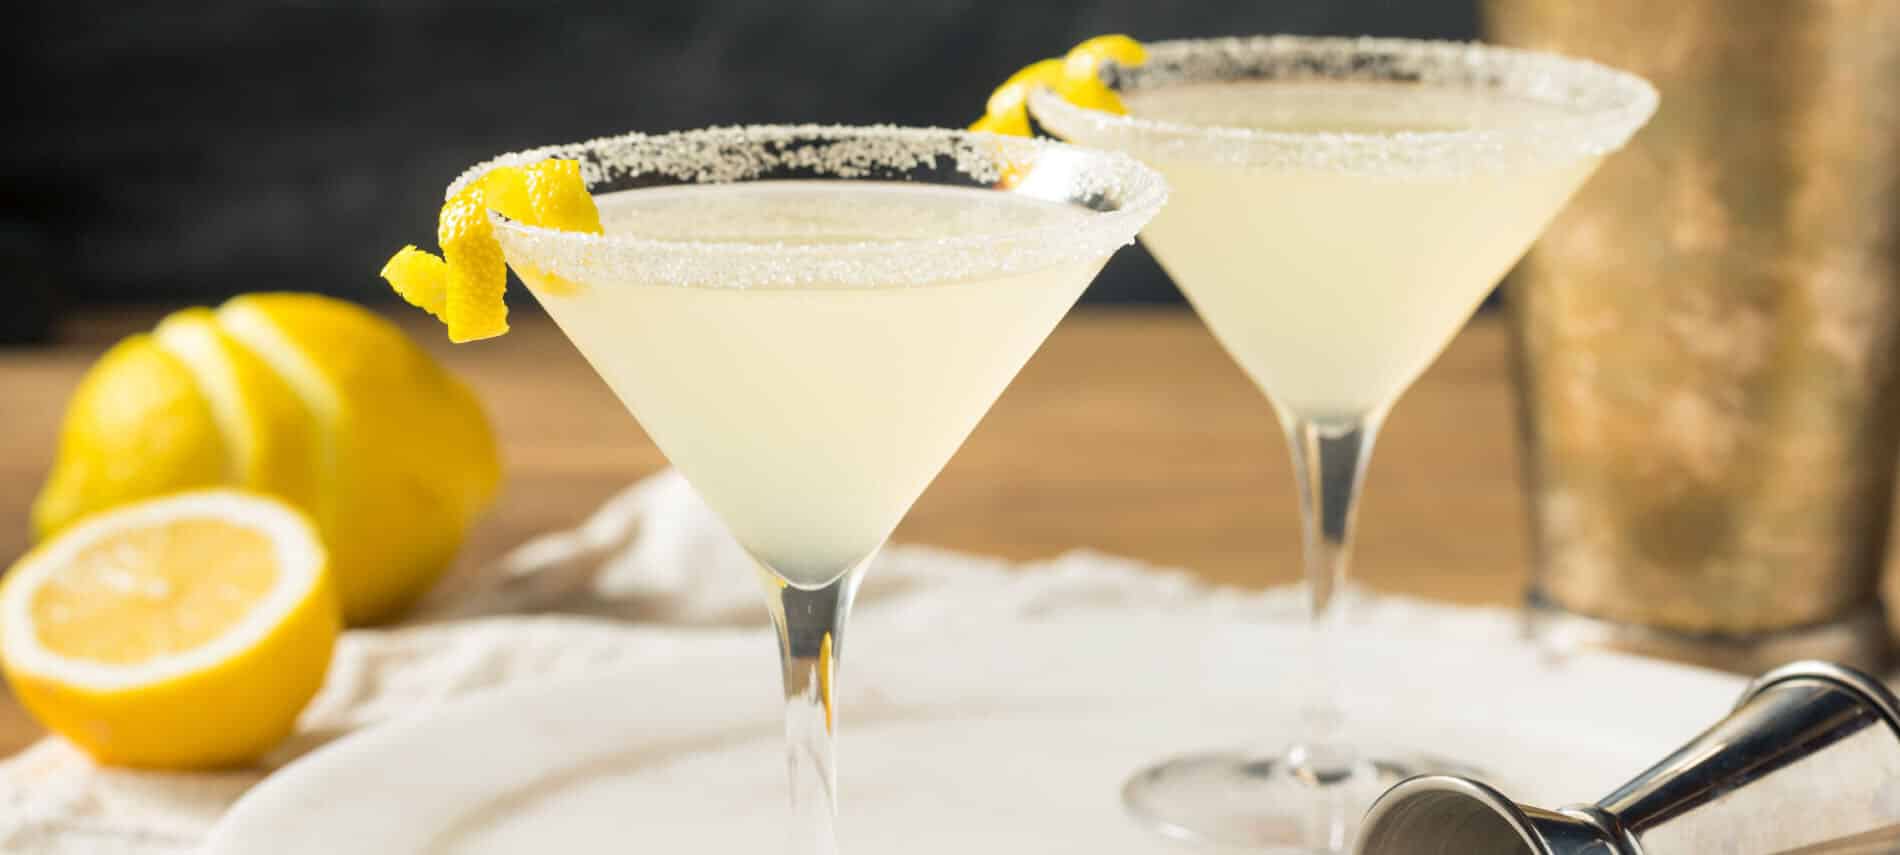 Yellow lemon Martini in clear glasses with lemons